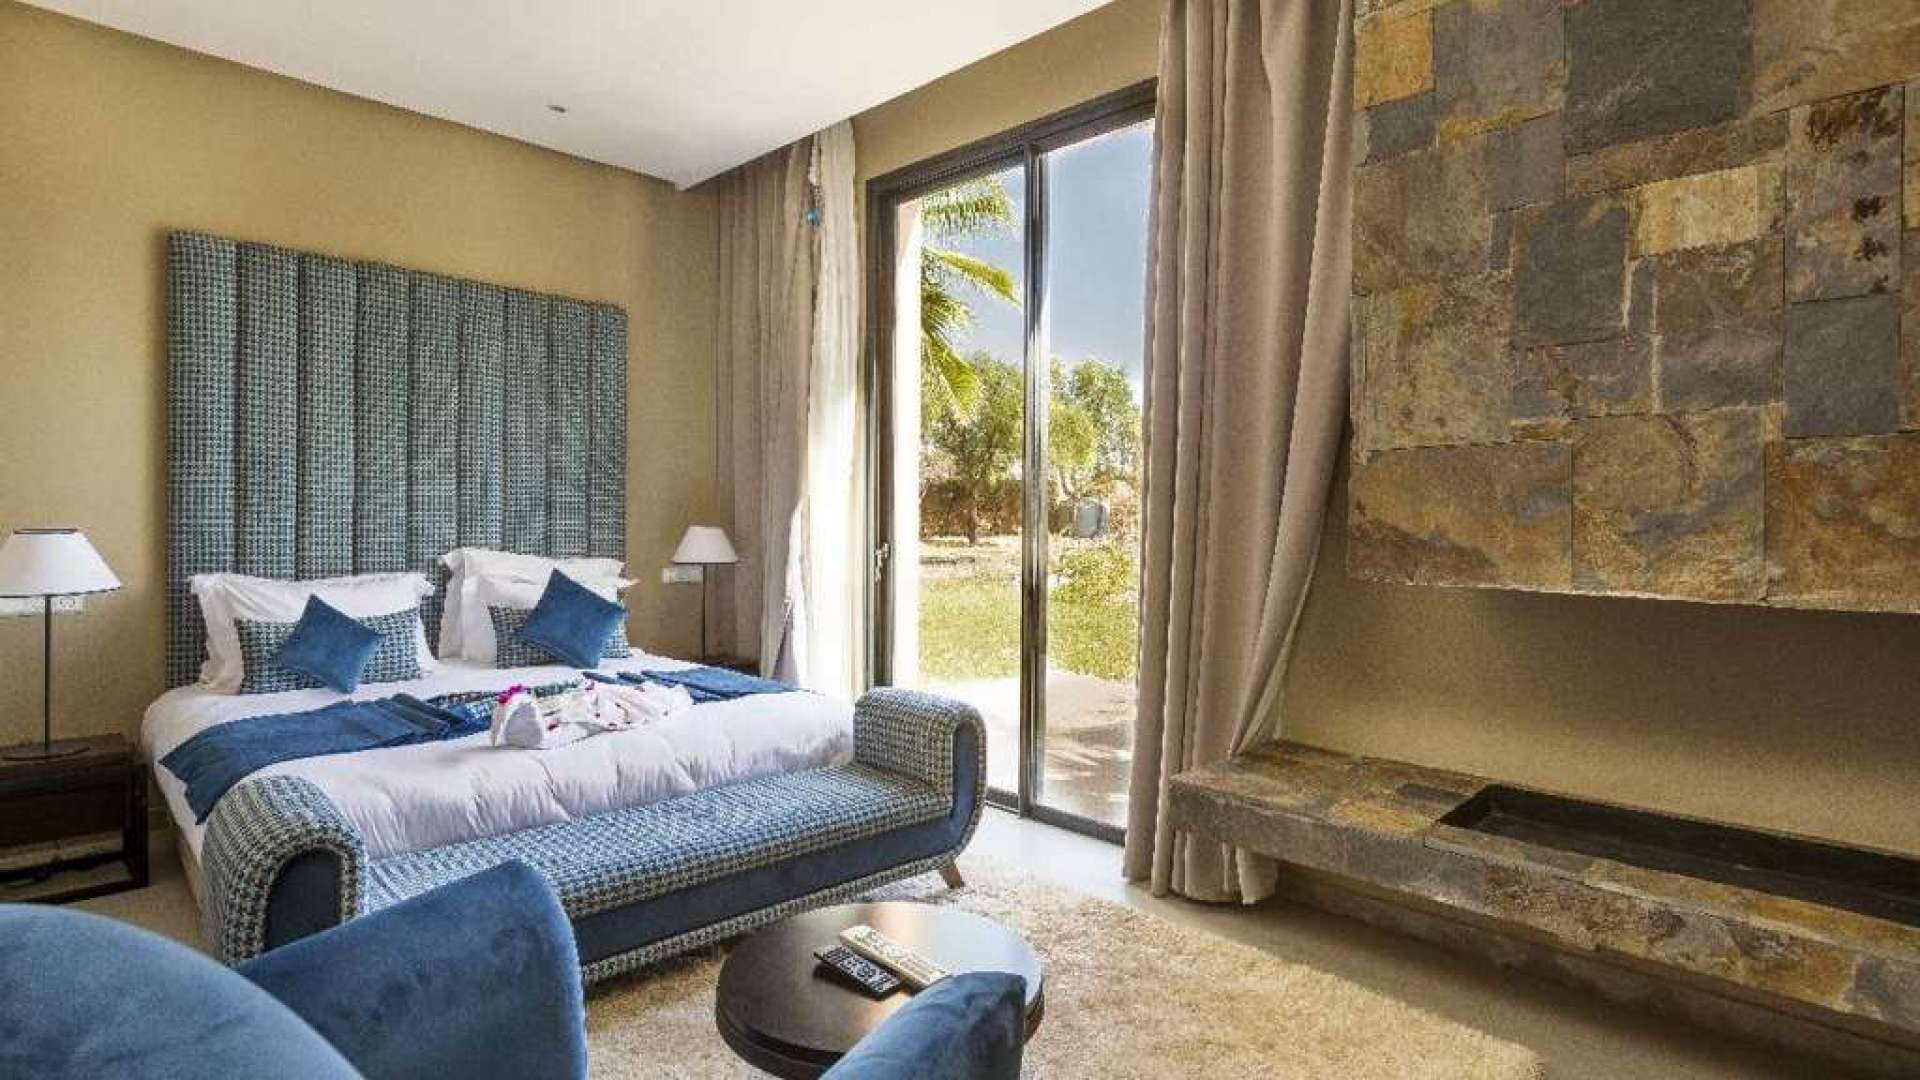 Location de vacances,Villa,Location de vacances Villa de luxe dans la palmeraie de Marrakech avec jardin et piscine,Marrakech,Palmeraie